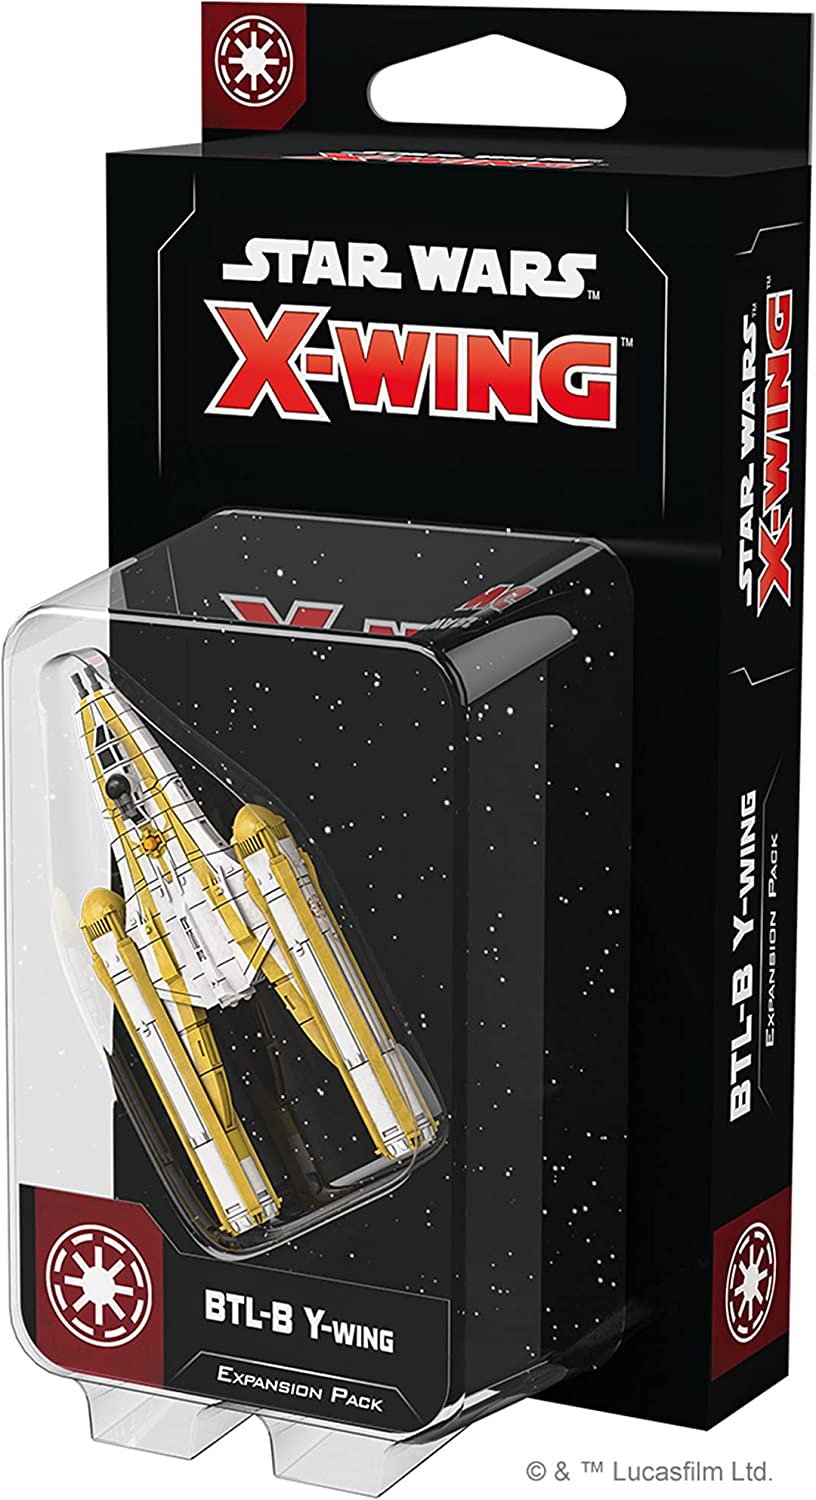 Star Wars: X Wing - BTL-B Y-Wing Expansion Pack